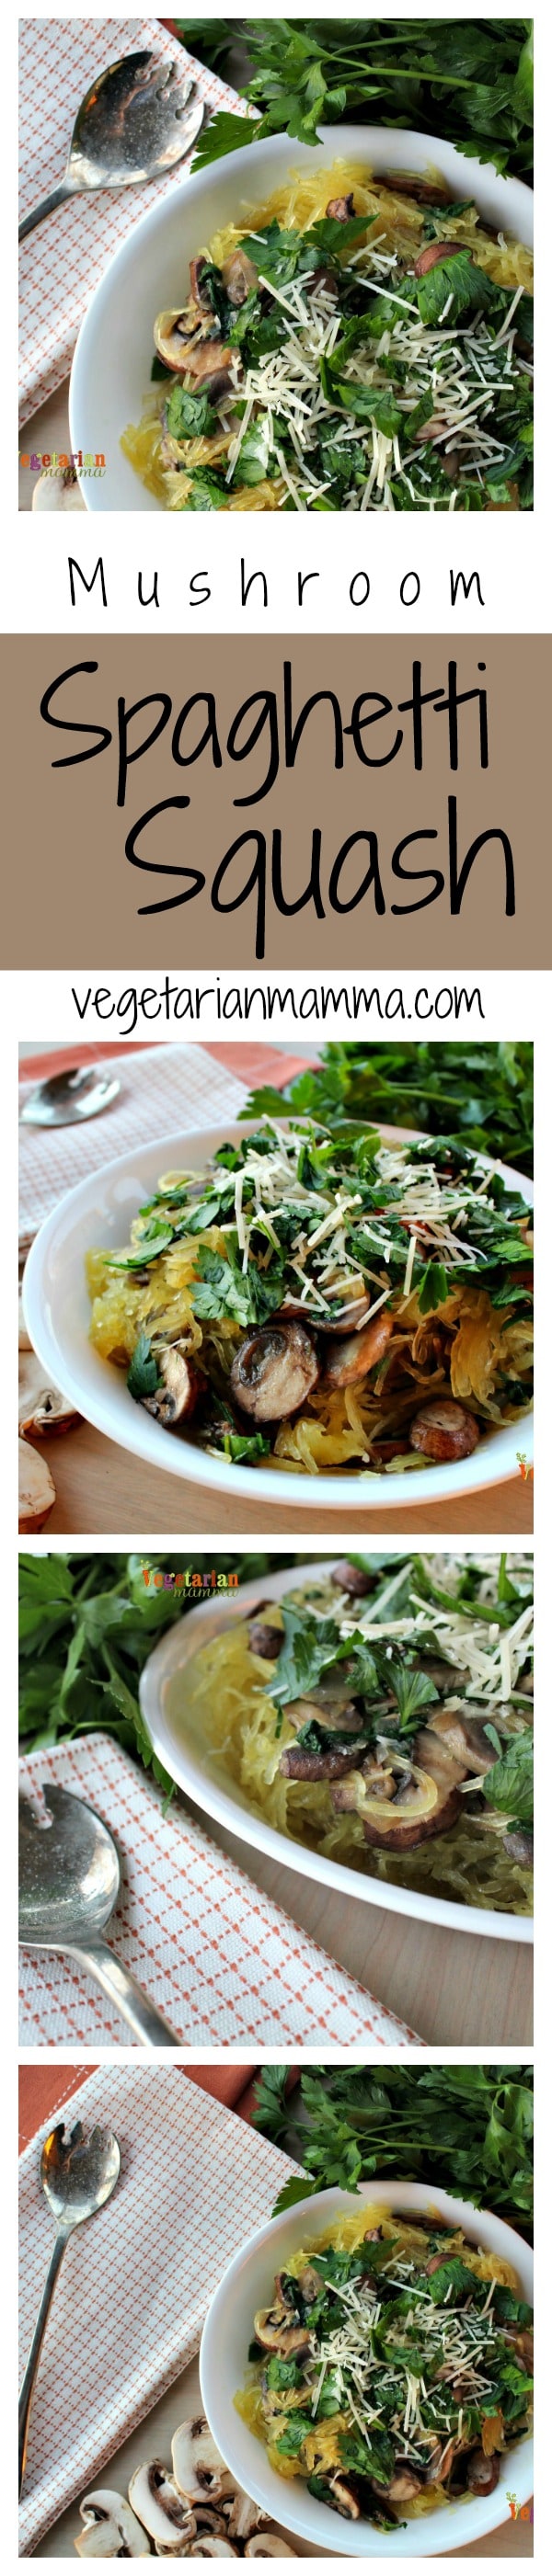 Mushroom Spaghetti Squash from @vegetarianmamma.com 